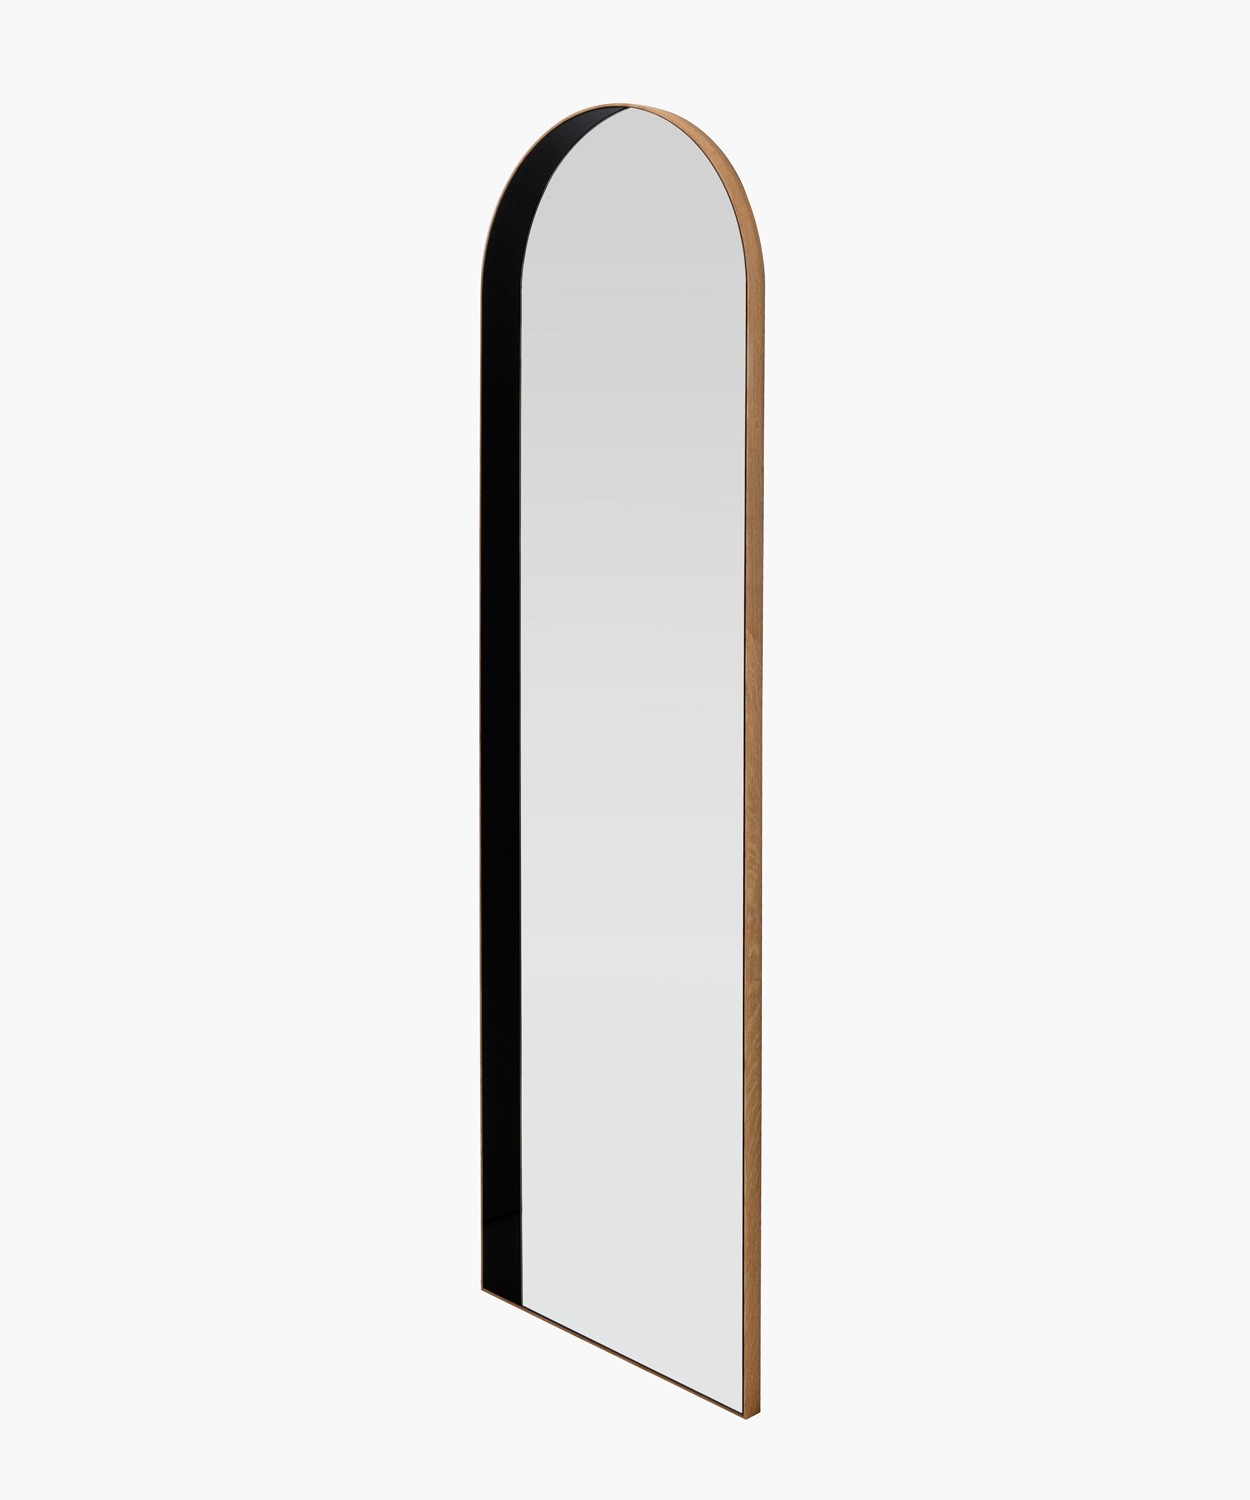 Slim Archway Mirror by Bower